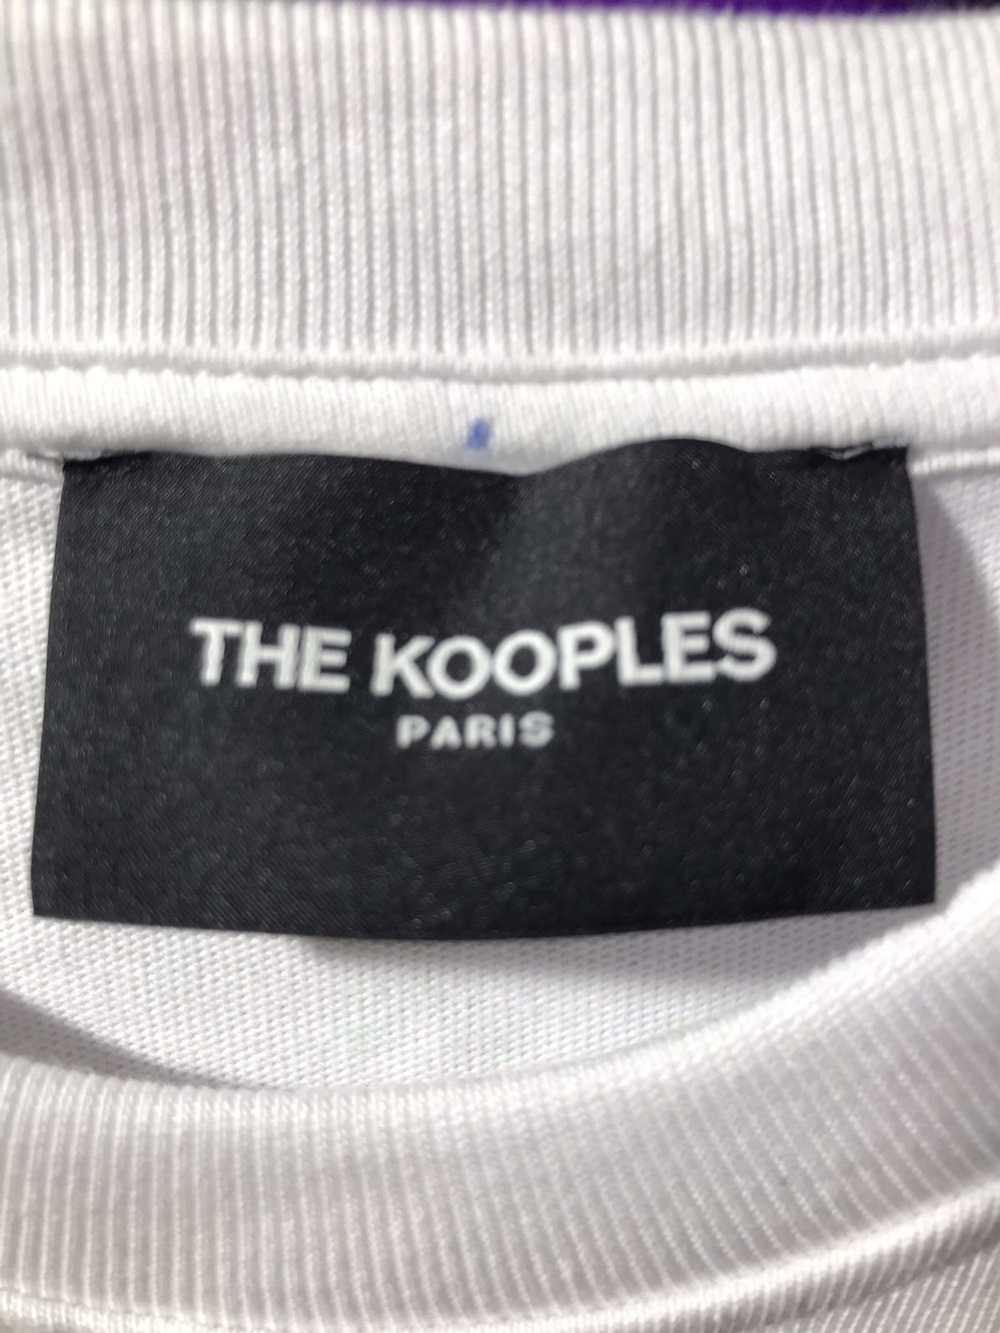 The Kooples T shirt The Kooples Paris white size s - image 7